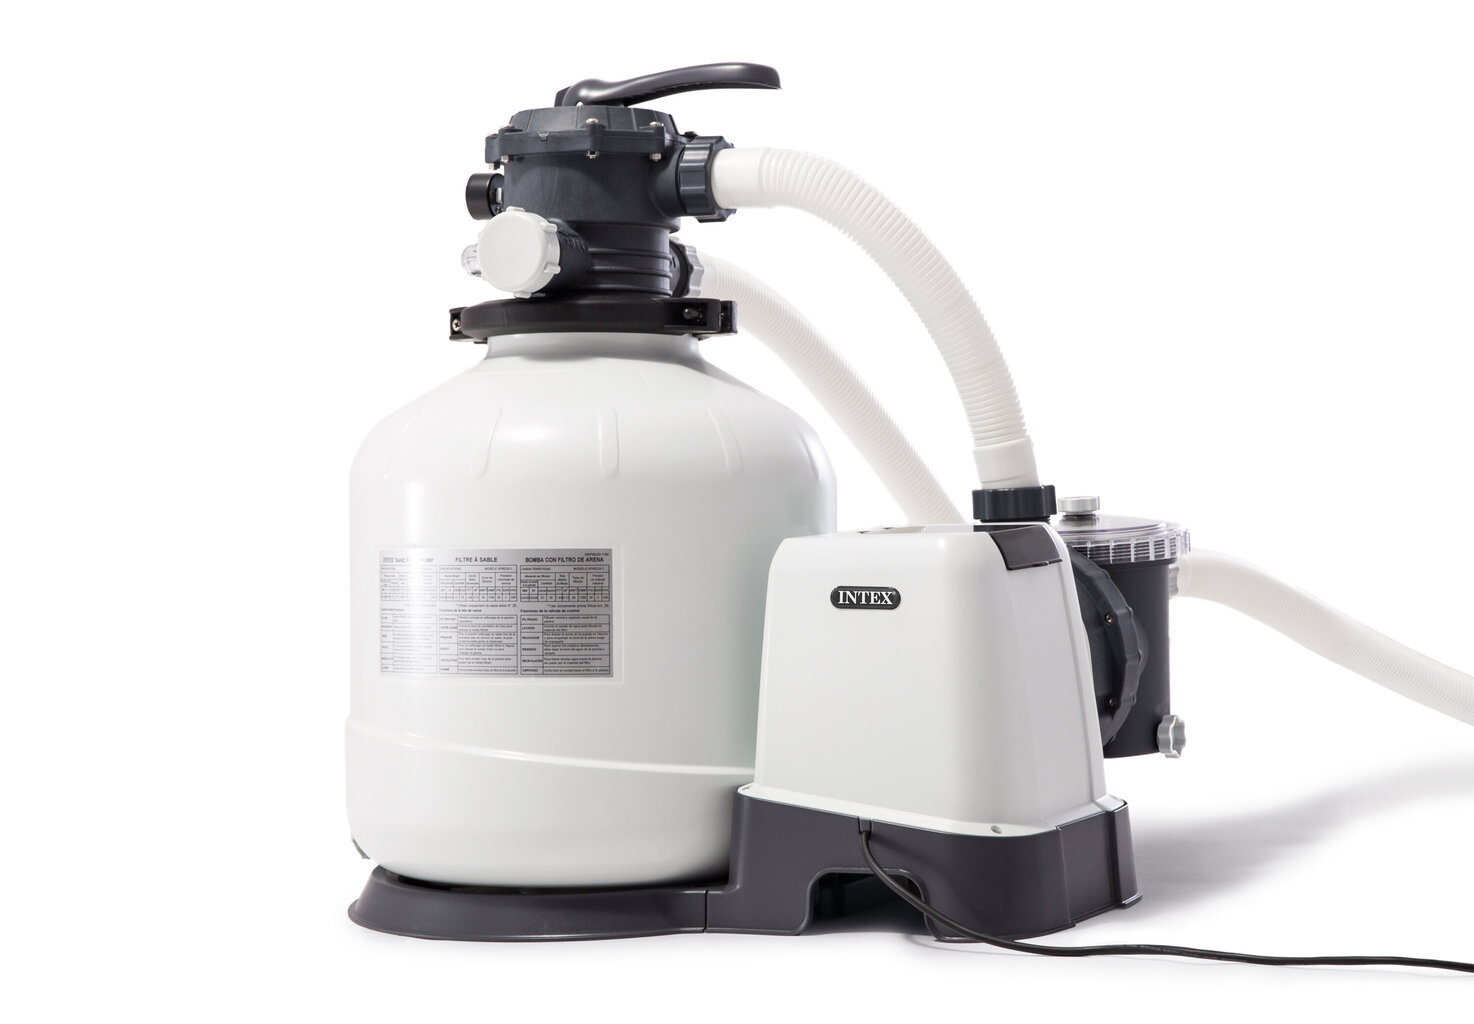 Baseino smėlio filtras su pompa Intex Krystal Clear SX3200, 9200 l/val цена и информация | Baseinų filtrai | pigu.lt